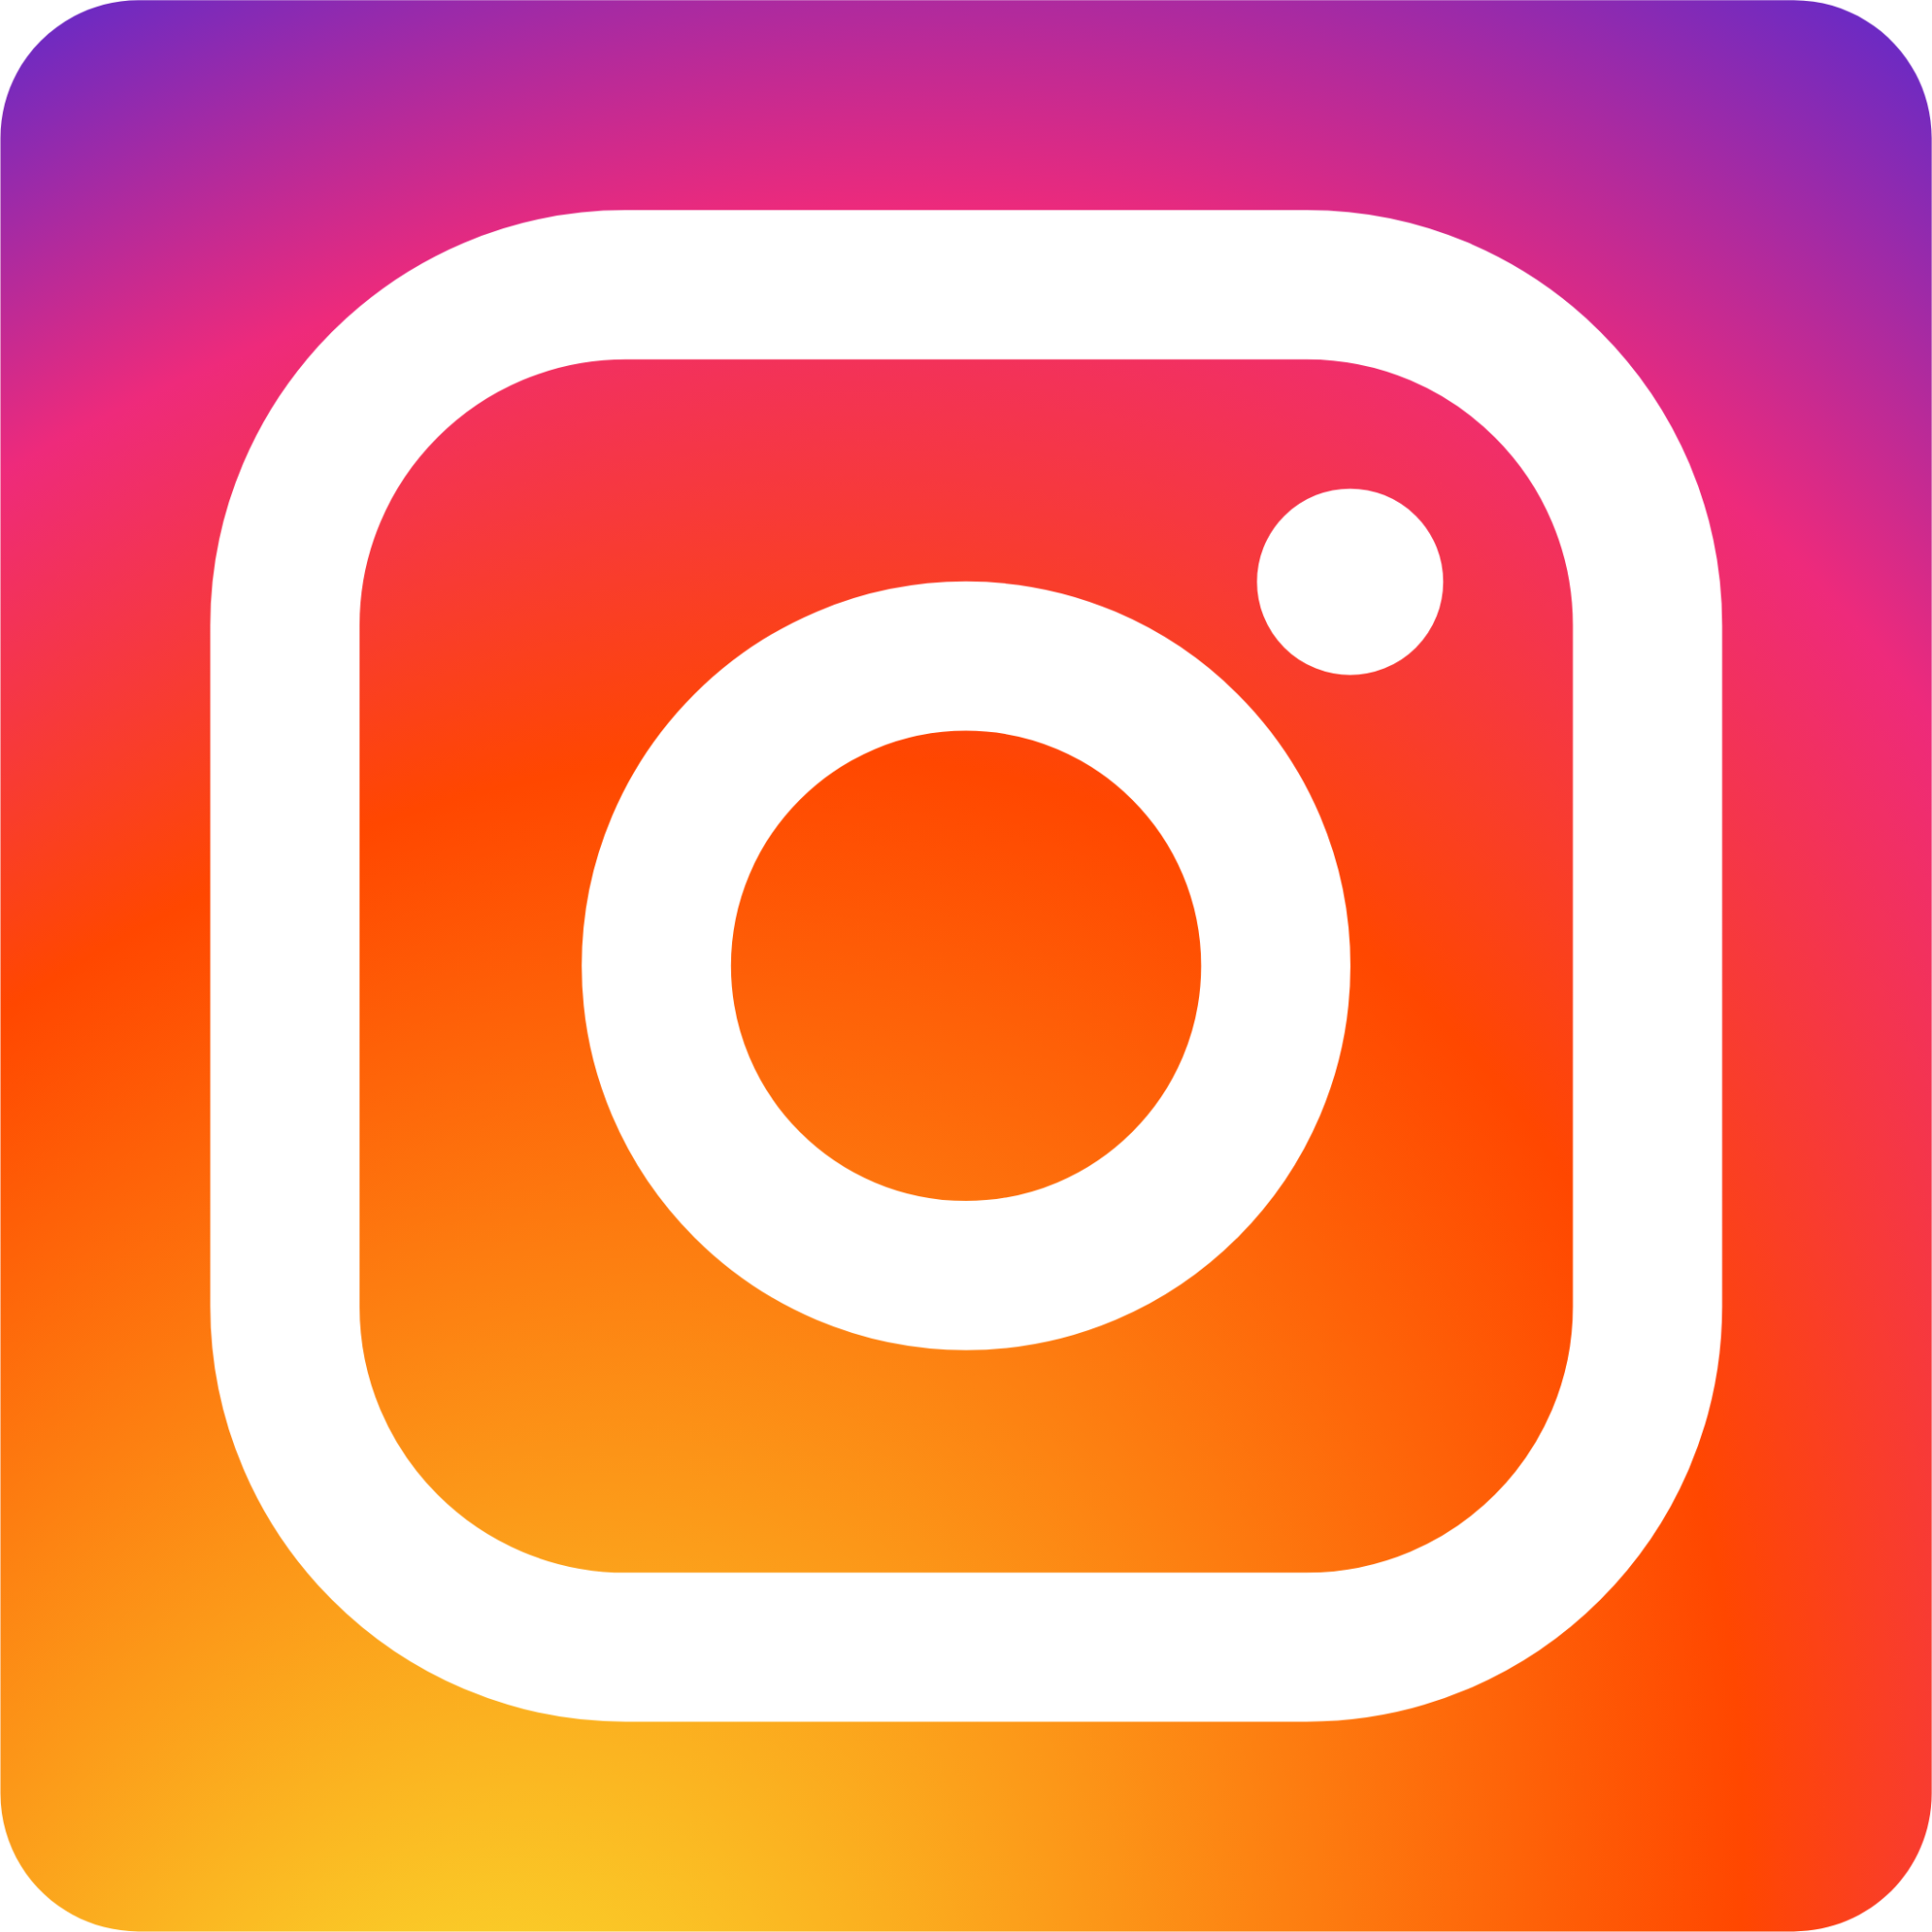 social instagram icon